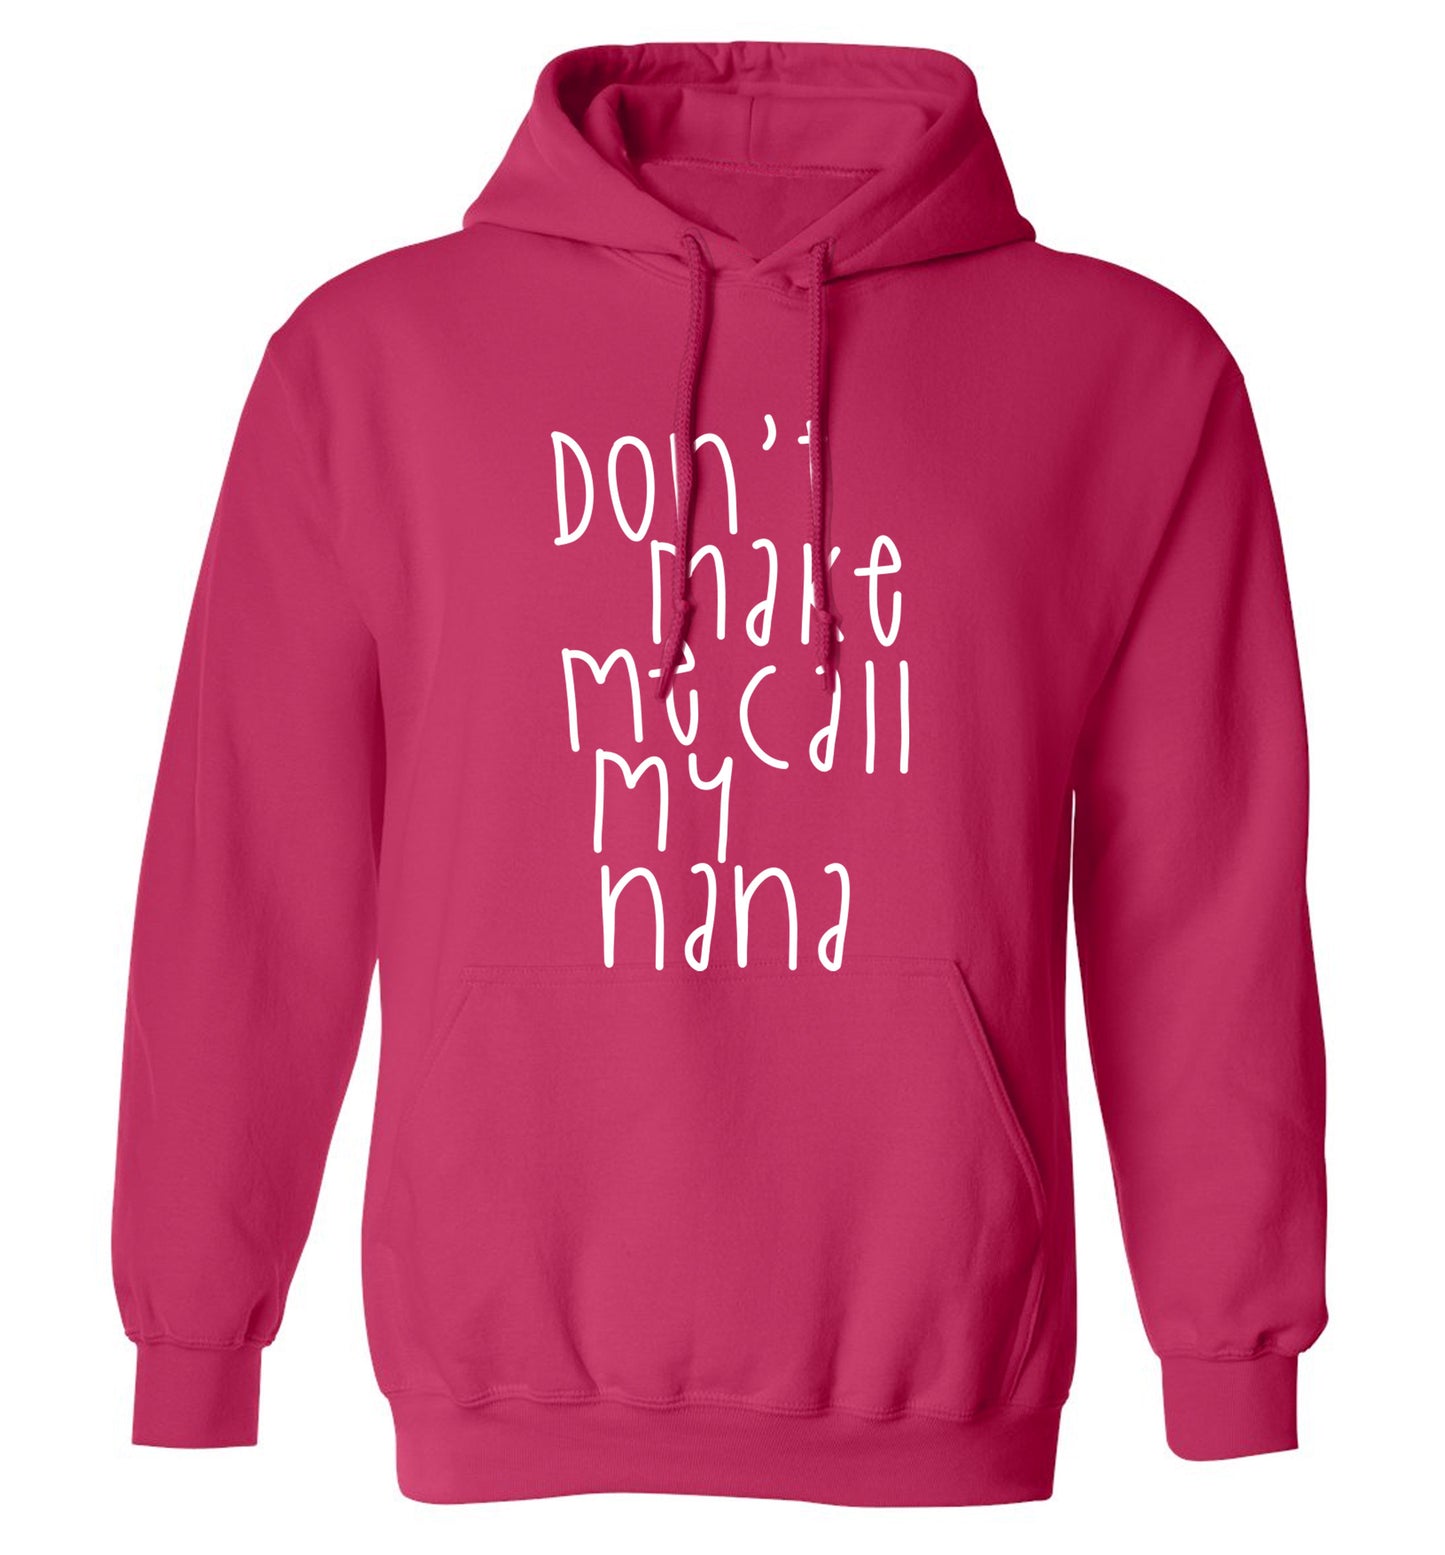 Don't make me call my nana adults unisex pink hoodie 2XL